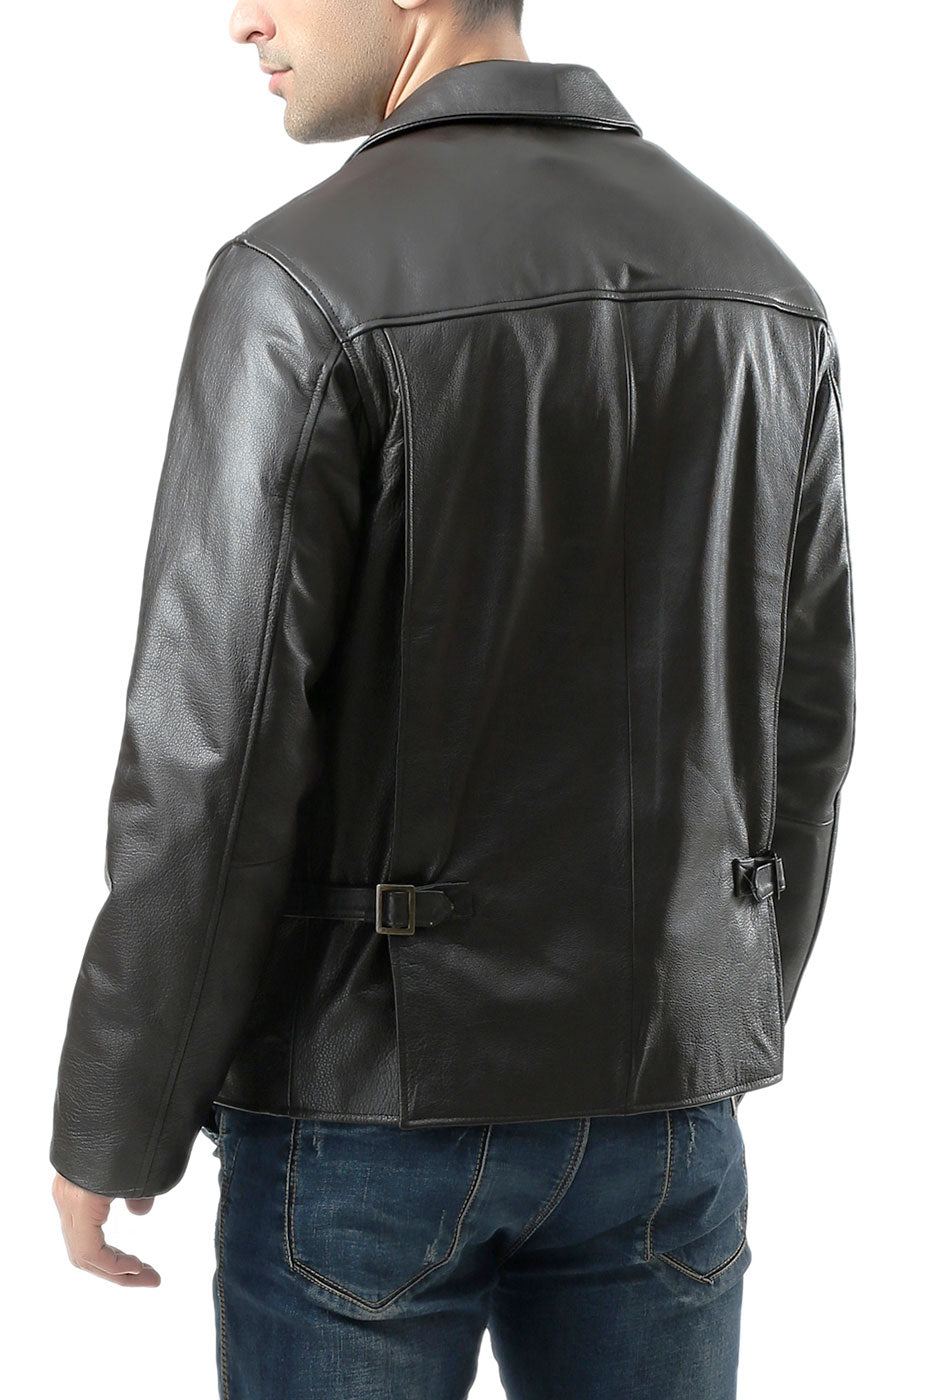 Landing Leathers Men Voyager Indy-Style Goatskin Leather Adventurer Jacket